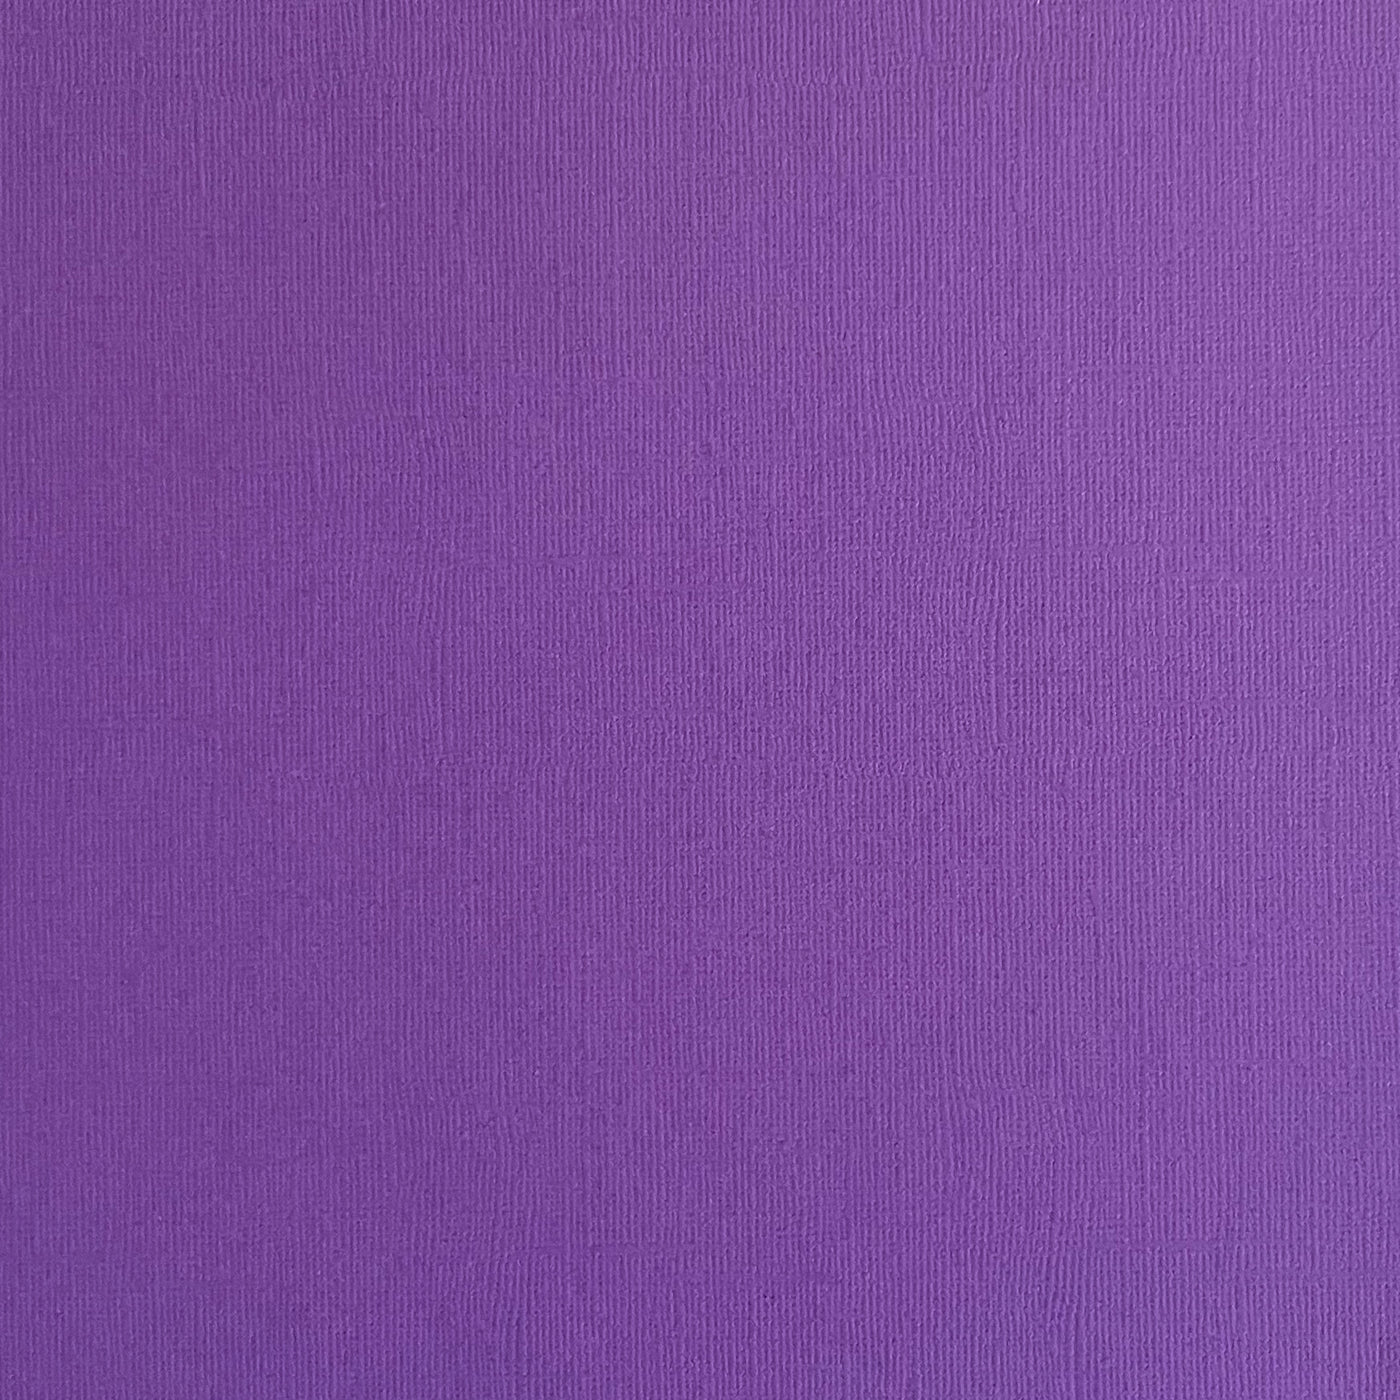 DUTCH IRIS - Vibrant Purple Textured 12x12 Cardstock - Encore Paper